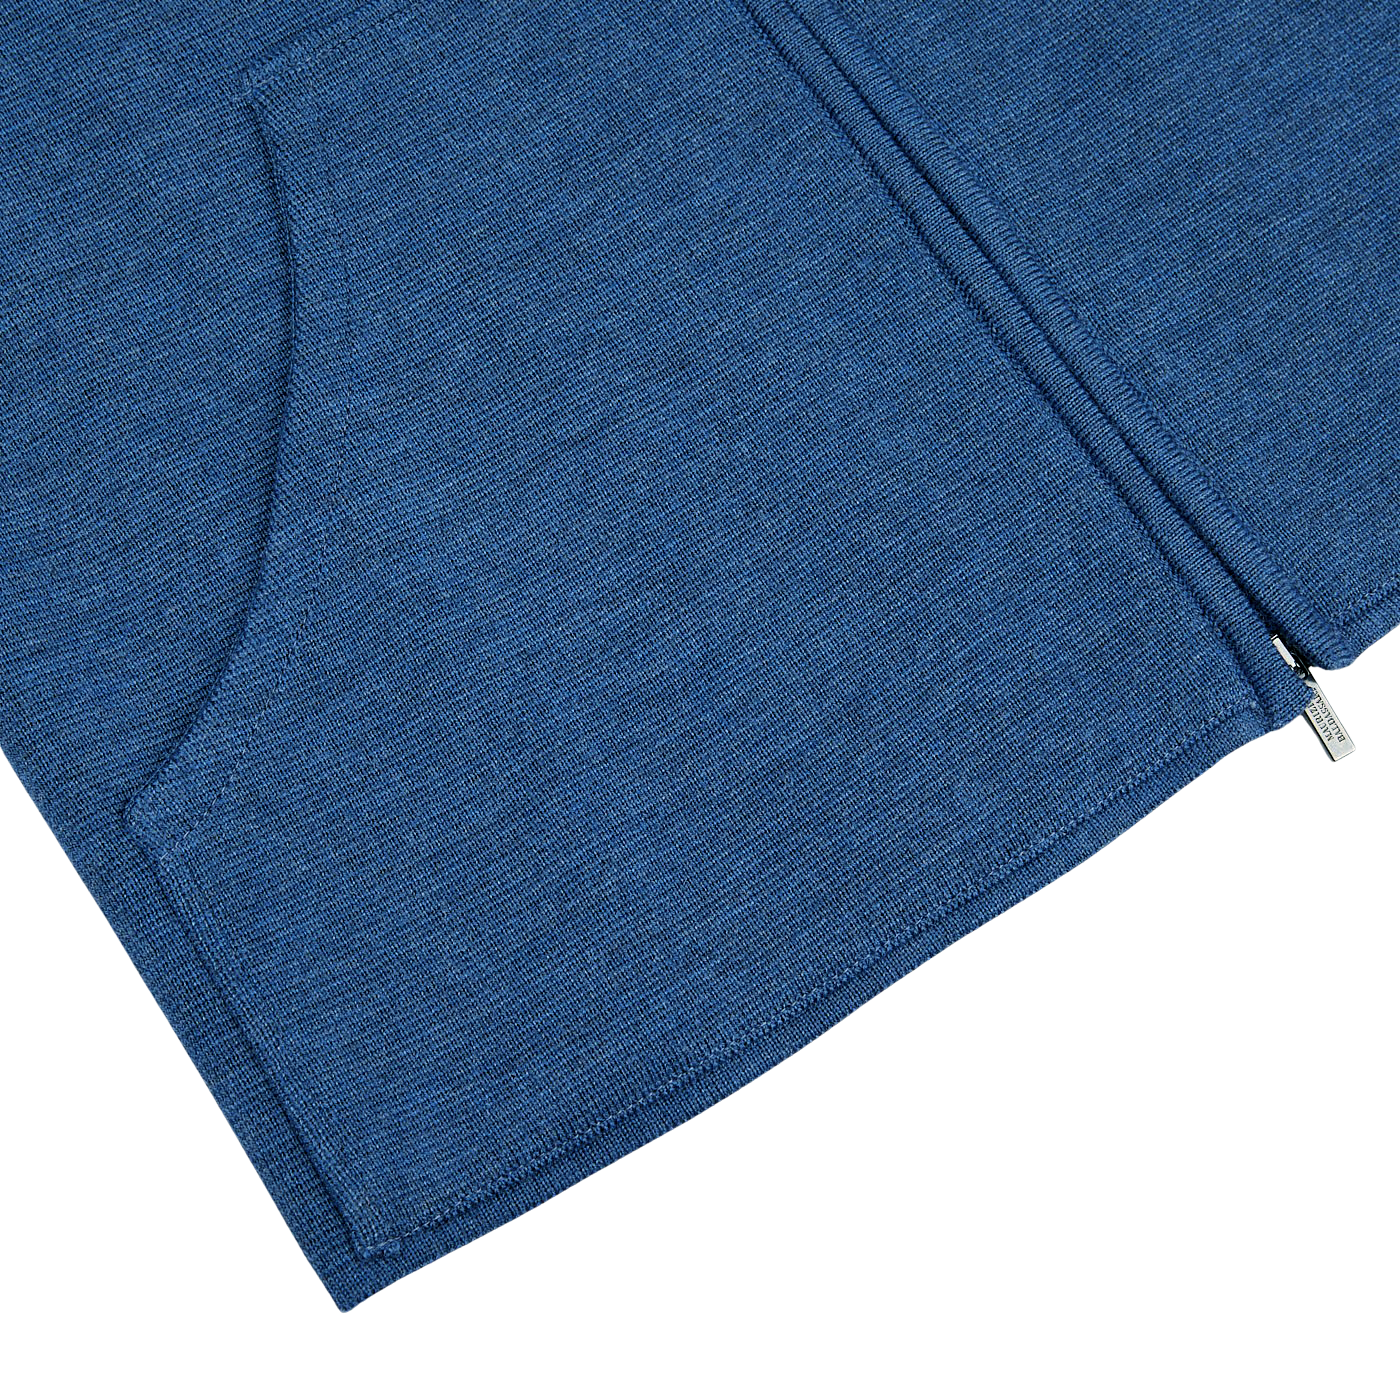 A Maurizio Baldassari Denim Blue Milano Stitch Wool Zip Gilet with a zippered pocket.